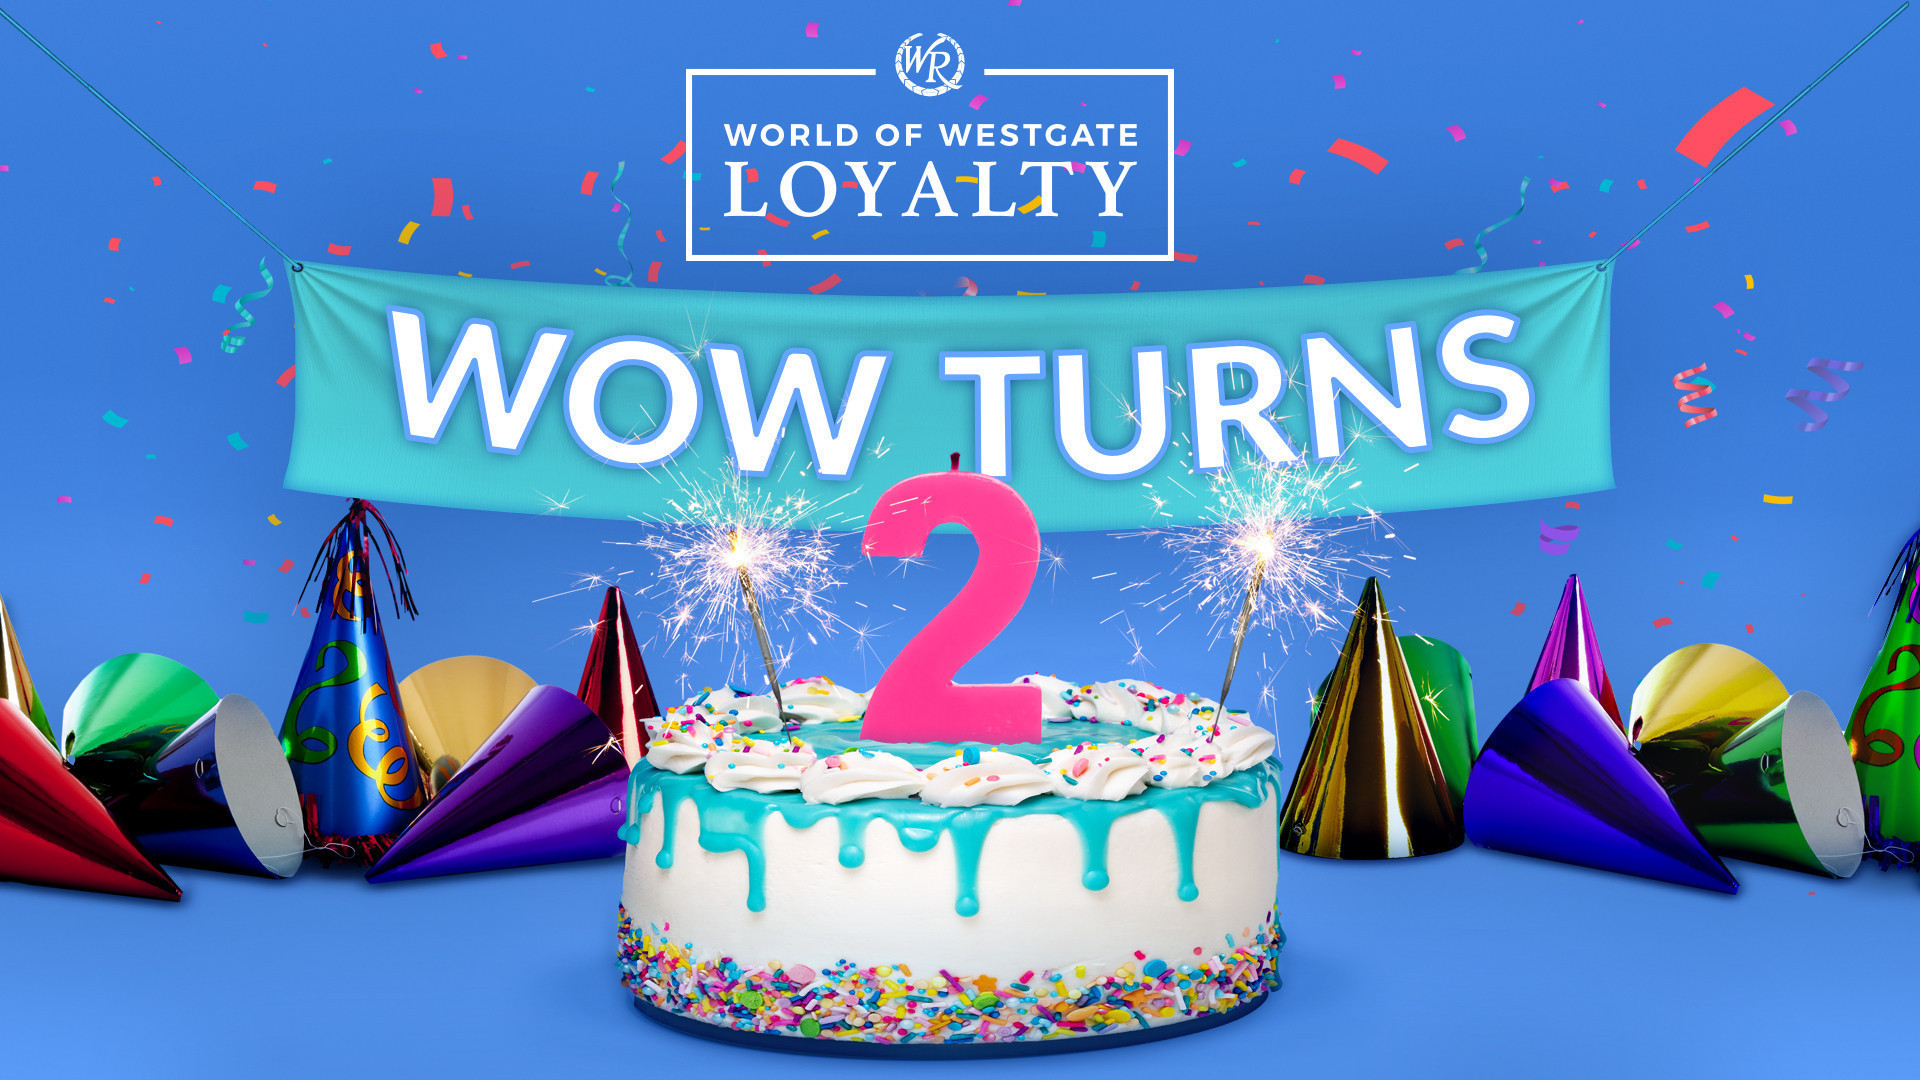 World of Westgate (WOW) Loyalty Program Celebrates 2nd Anniversary